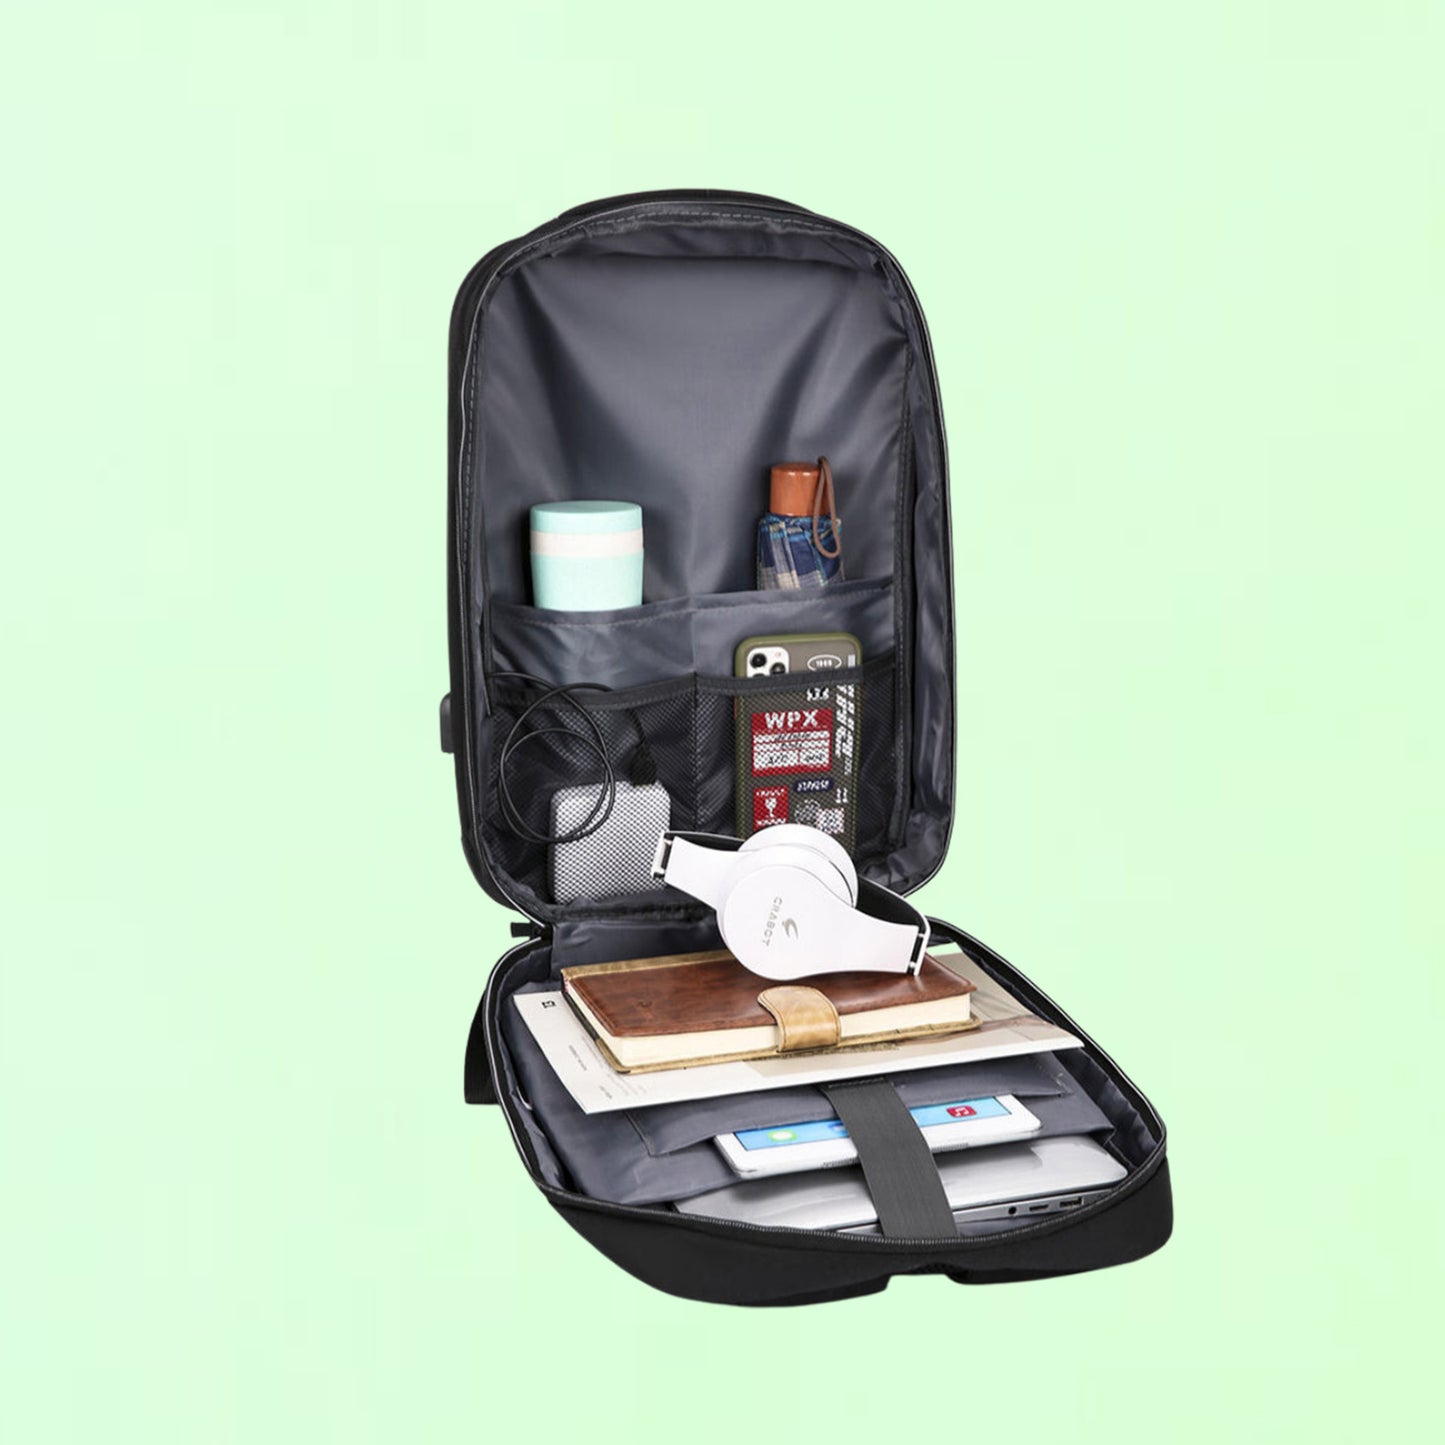 Aqua Guard Secure Waterproof Backpack with USB Port (Anti-Theft)